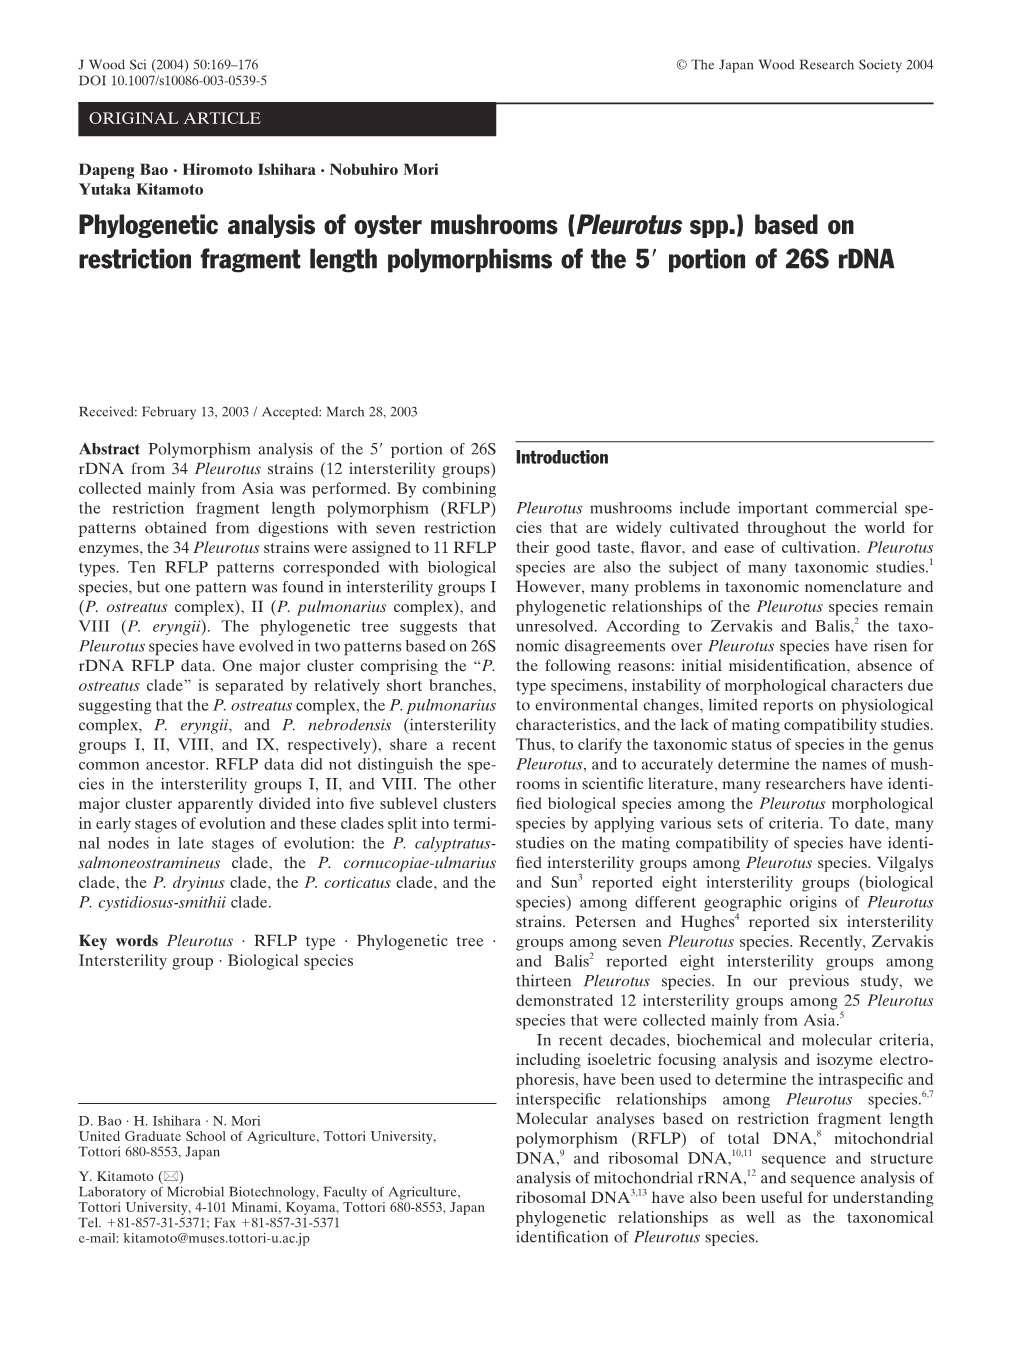 Phylogenetic Analysis of Oyster Mushrooms (Pleurotus Spp.) Based on Restriction Fragment Length Polymorphisms of the 5!